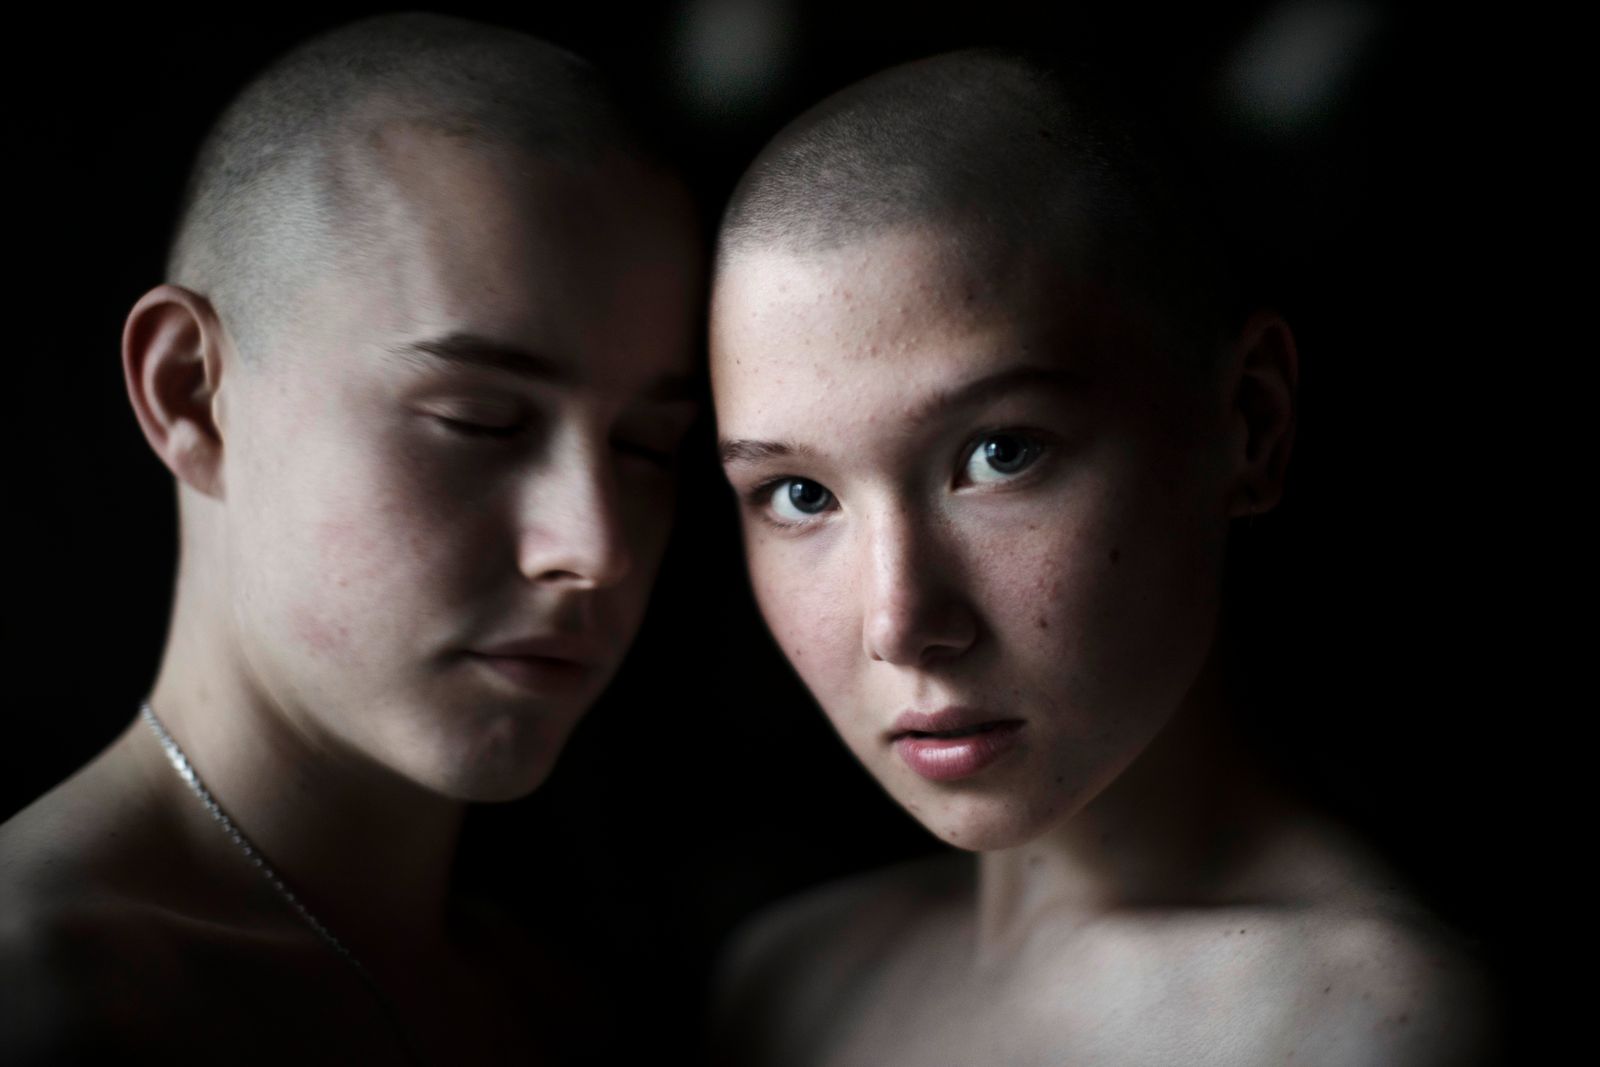 © Åsa Sjöström - Image from the Genderfree photography project